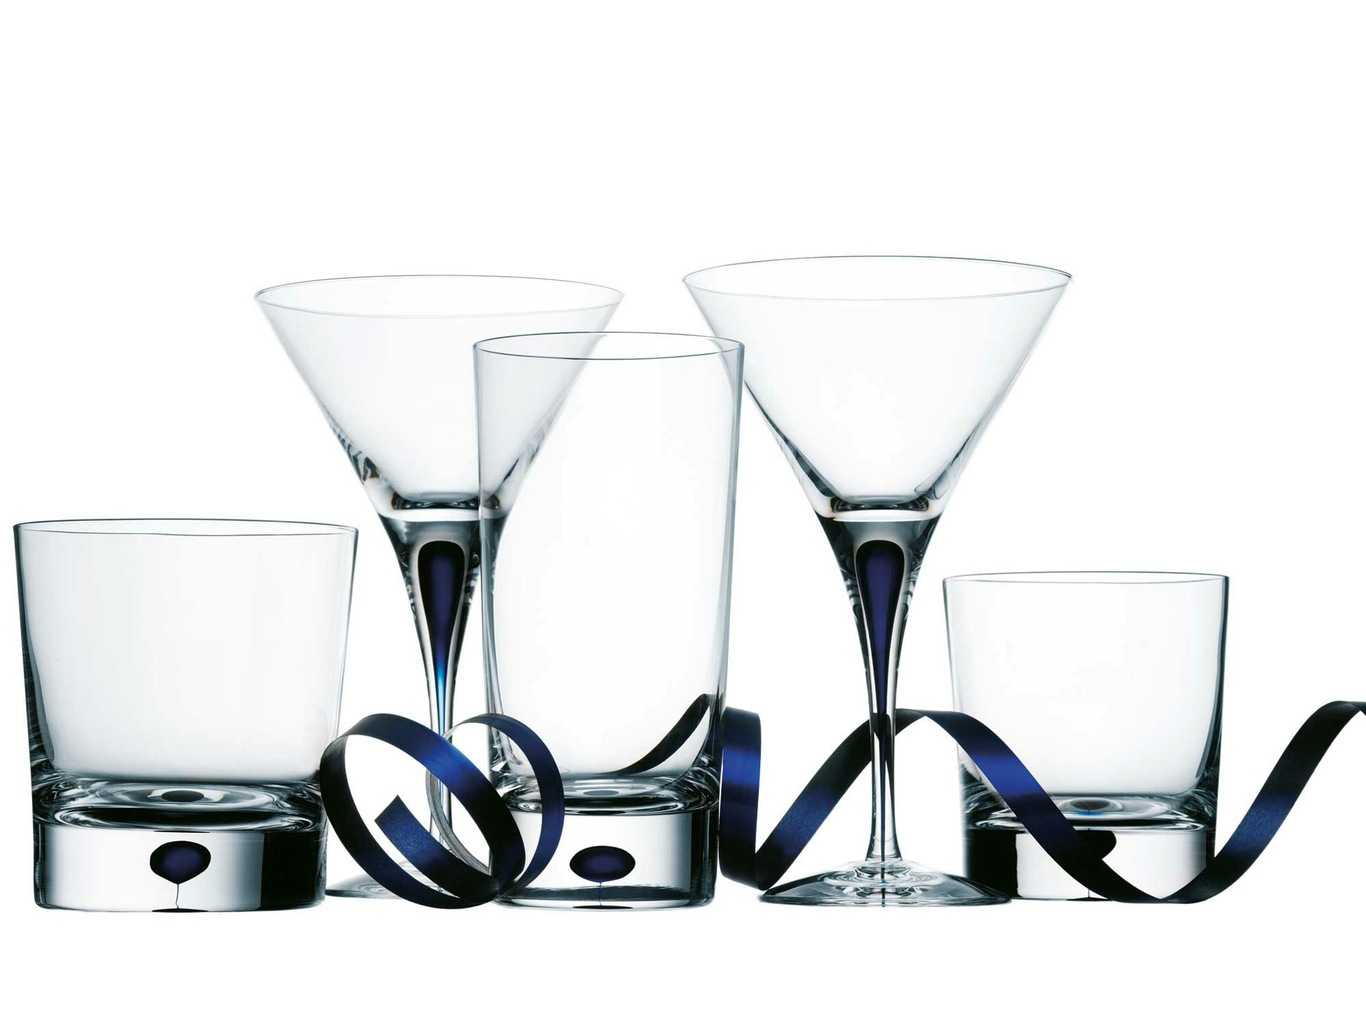 https://royaldesign.com/image/2/orrefors-intermezzo-blue-martini-glass-25-cl-1?w=800&quality=80